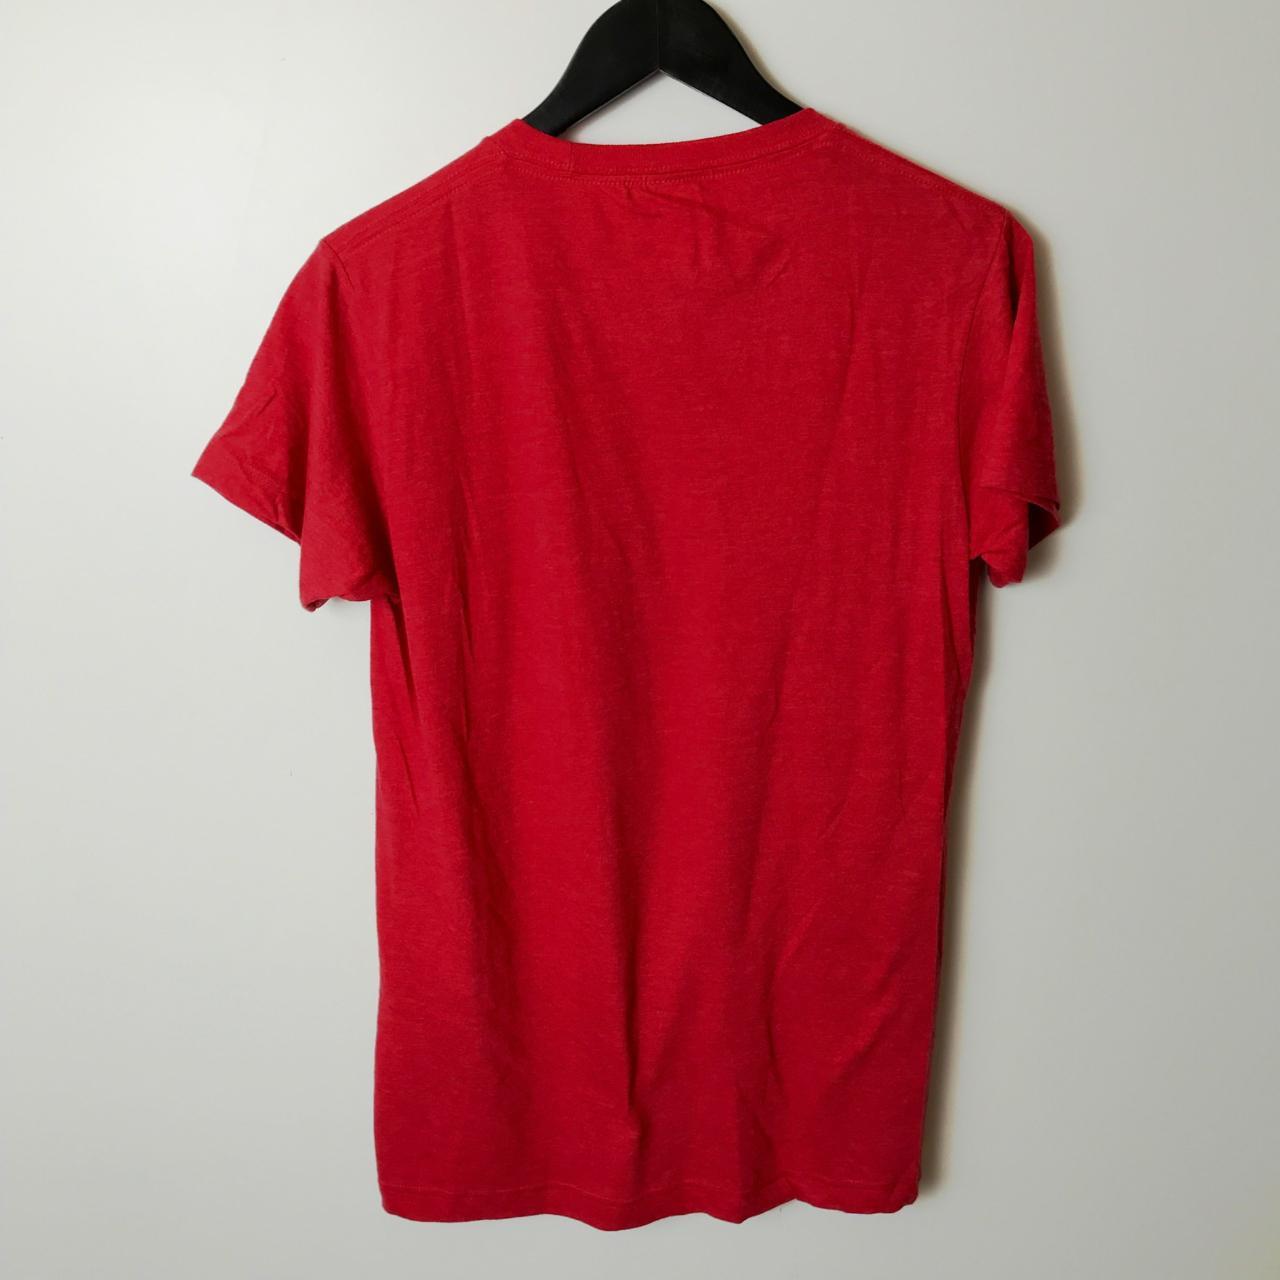 PacSun Men's Red T-shirt (4)